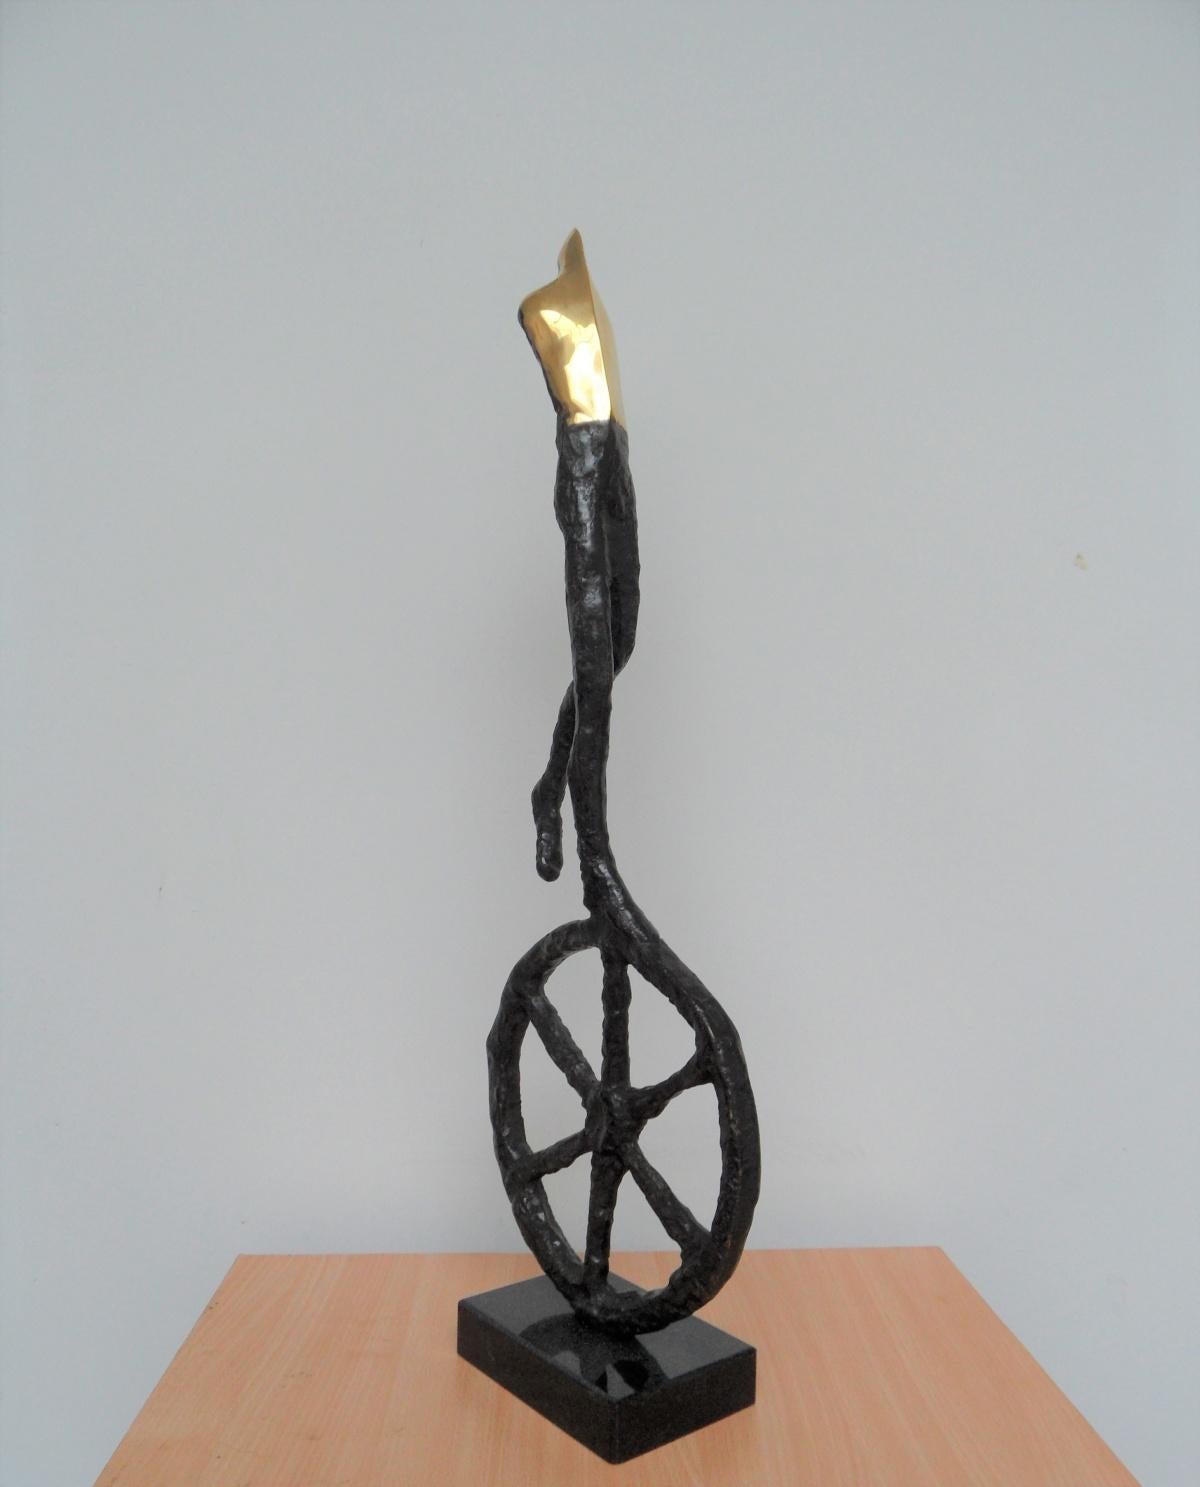 Figurative Sculpture Michal Kubiak - Une vagabonde, Sculture figurative originale en bronze contemporaine 